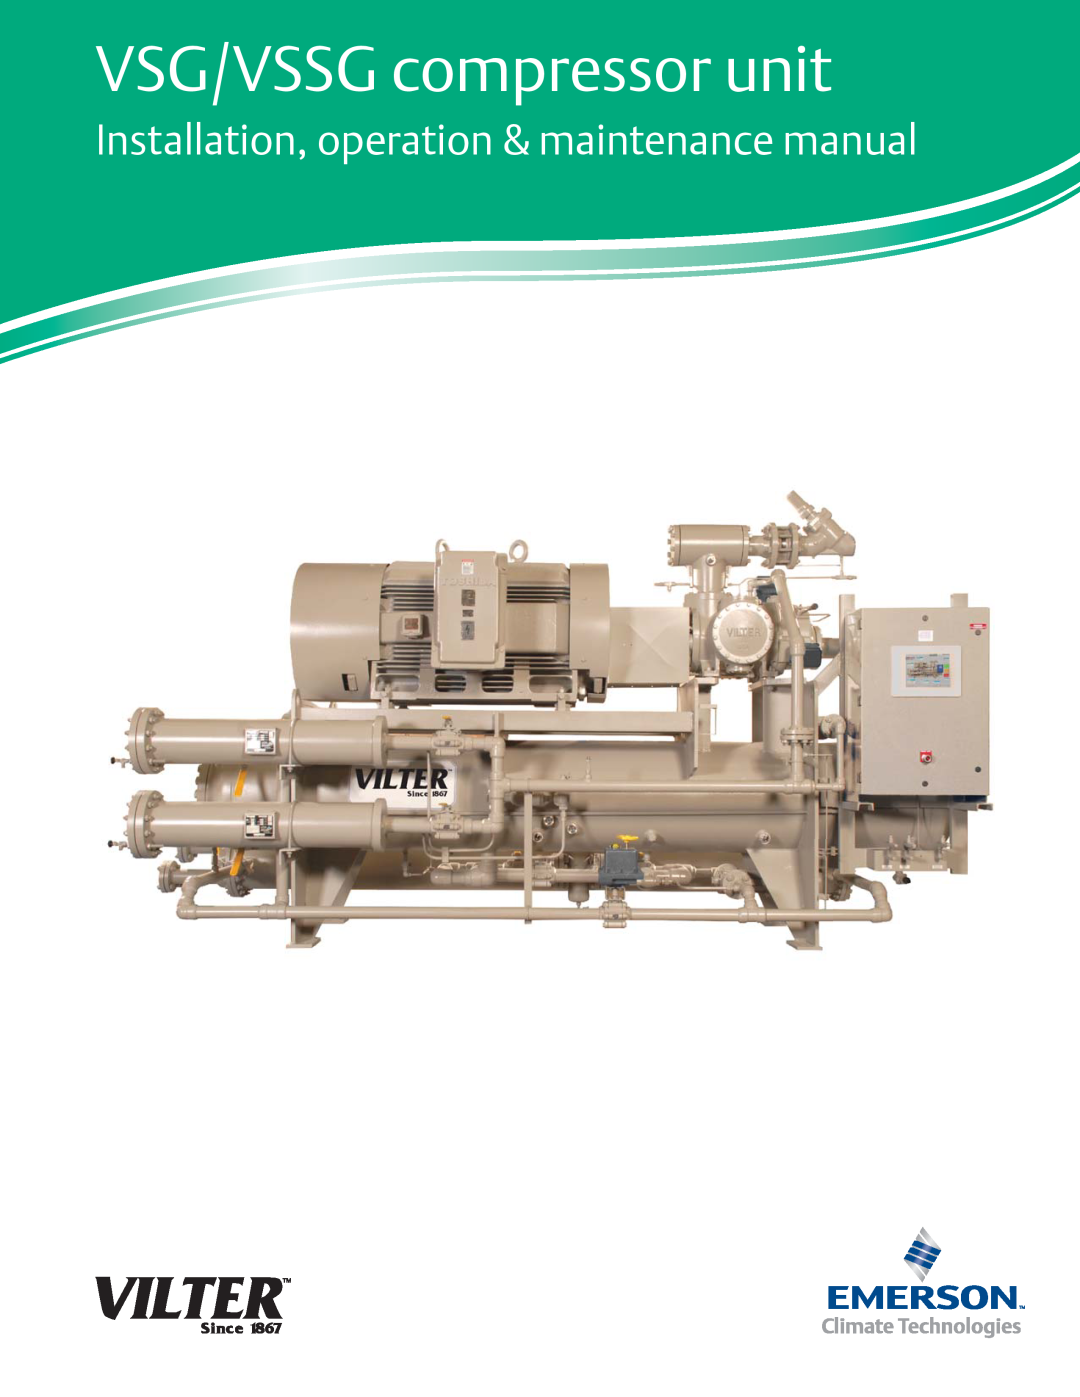 Emerson manual VSG/VSSG compressor unit, Installation, operation & maintenance manual 